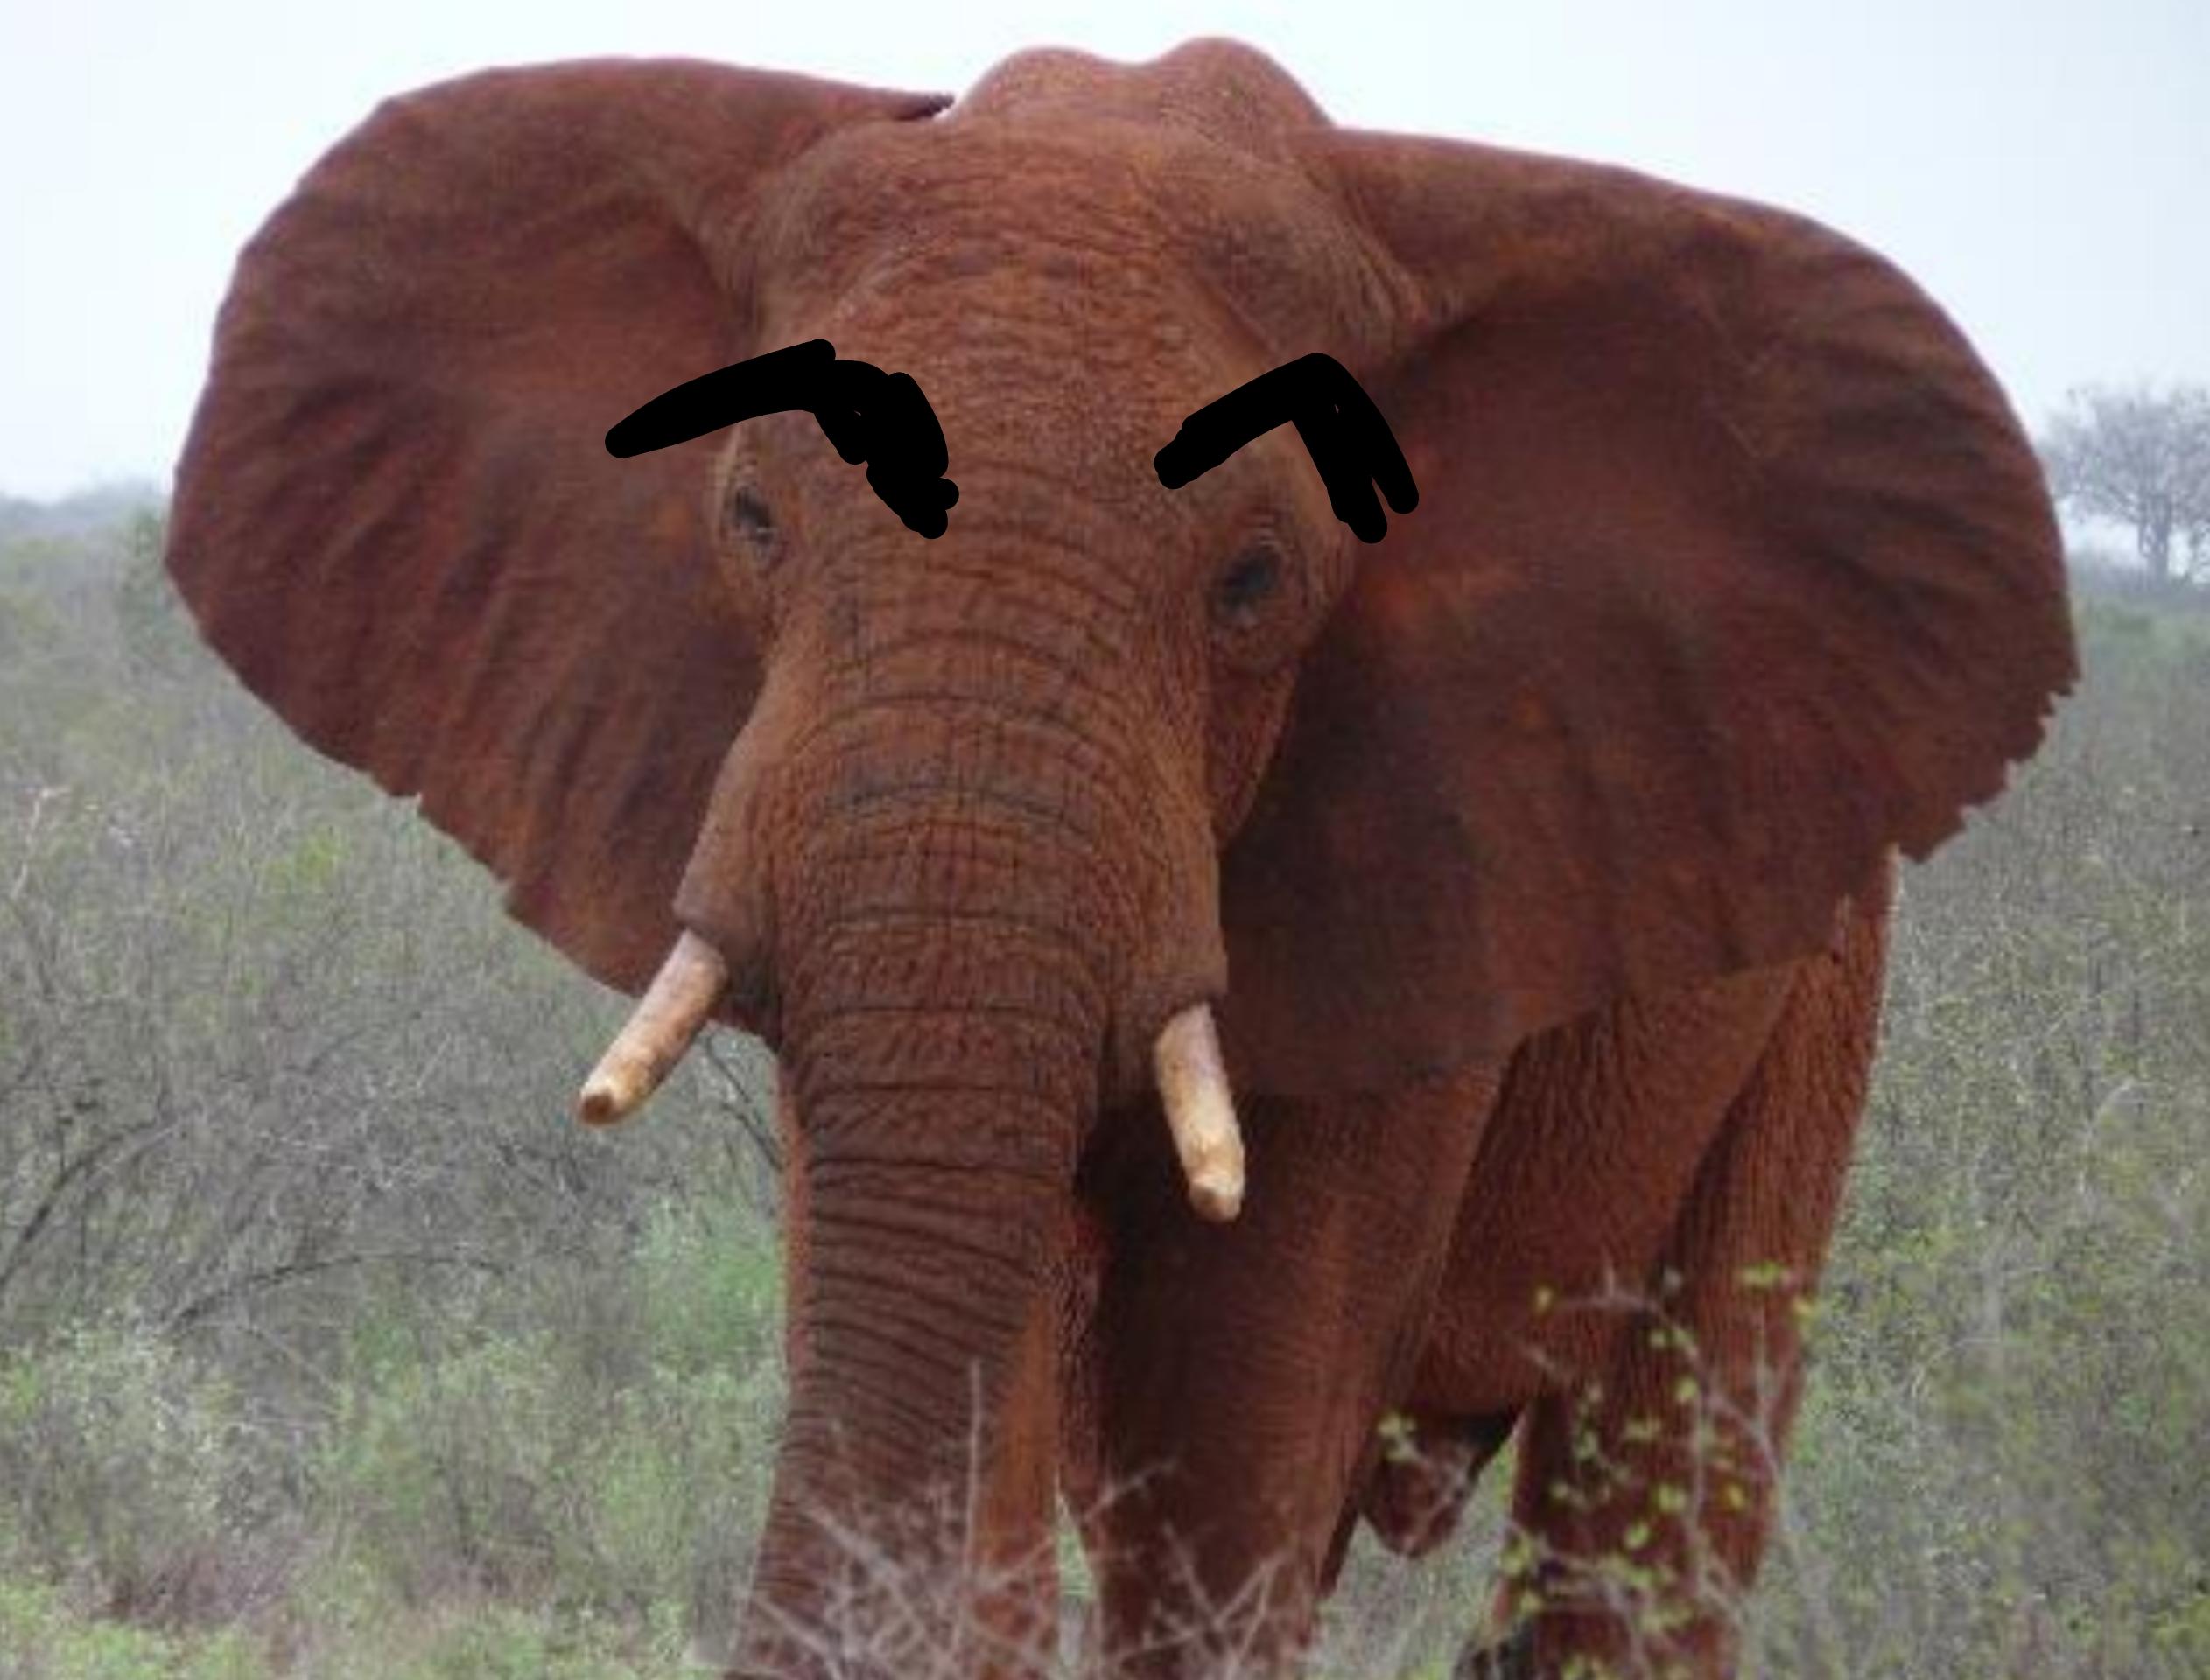 Do Elephants Have Eyebrows